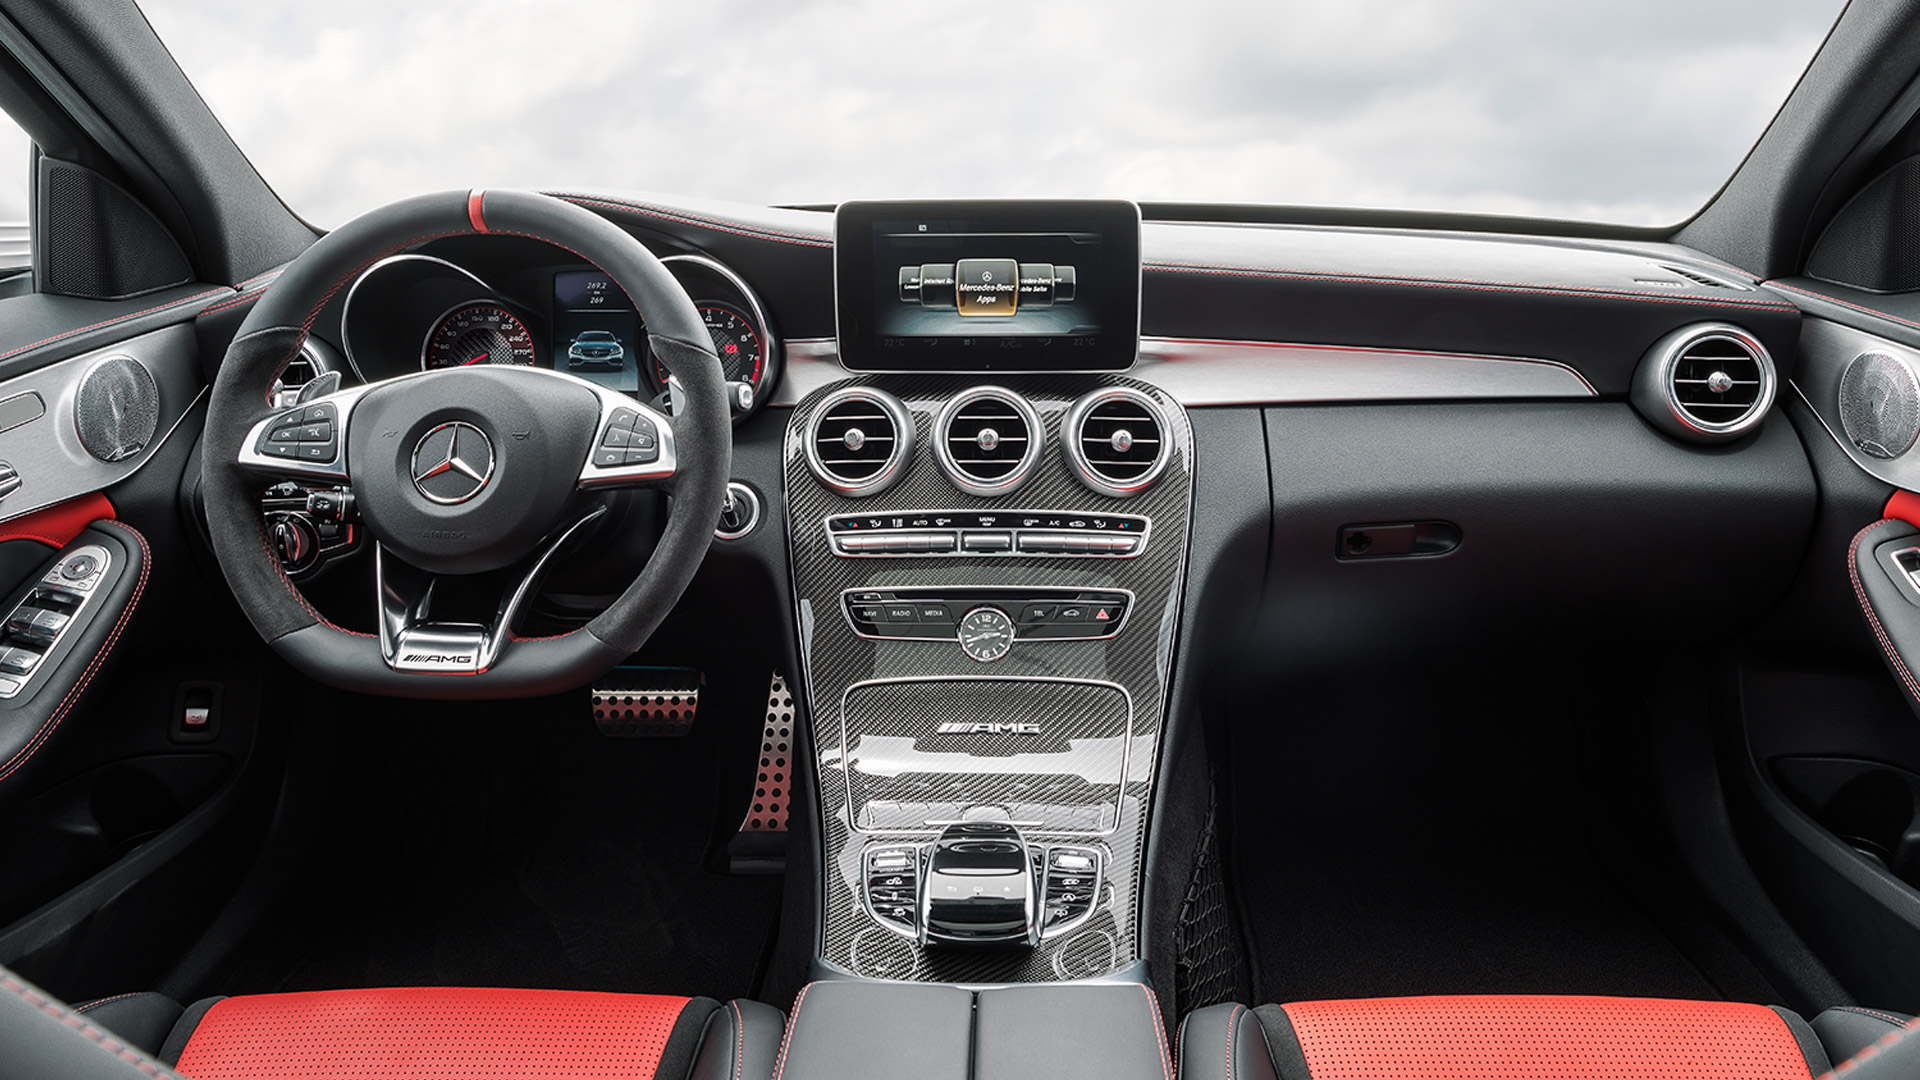 Mercedes Benz C 63 AMG 2015 S Interior